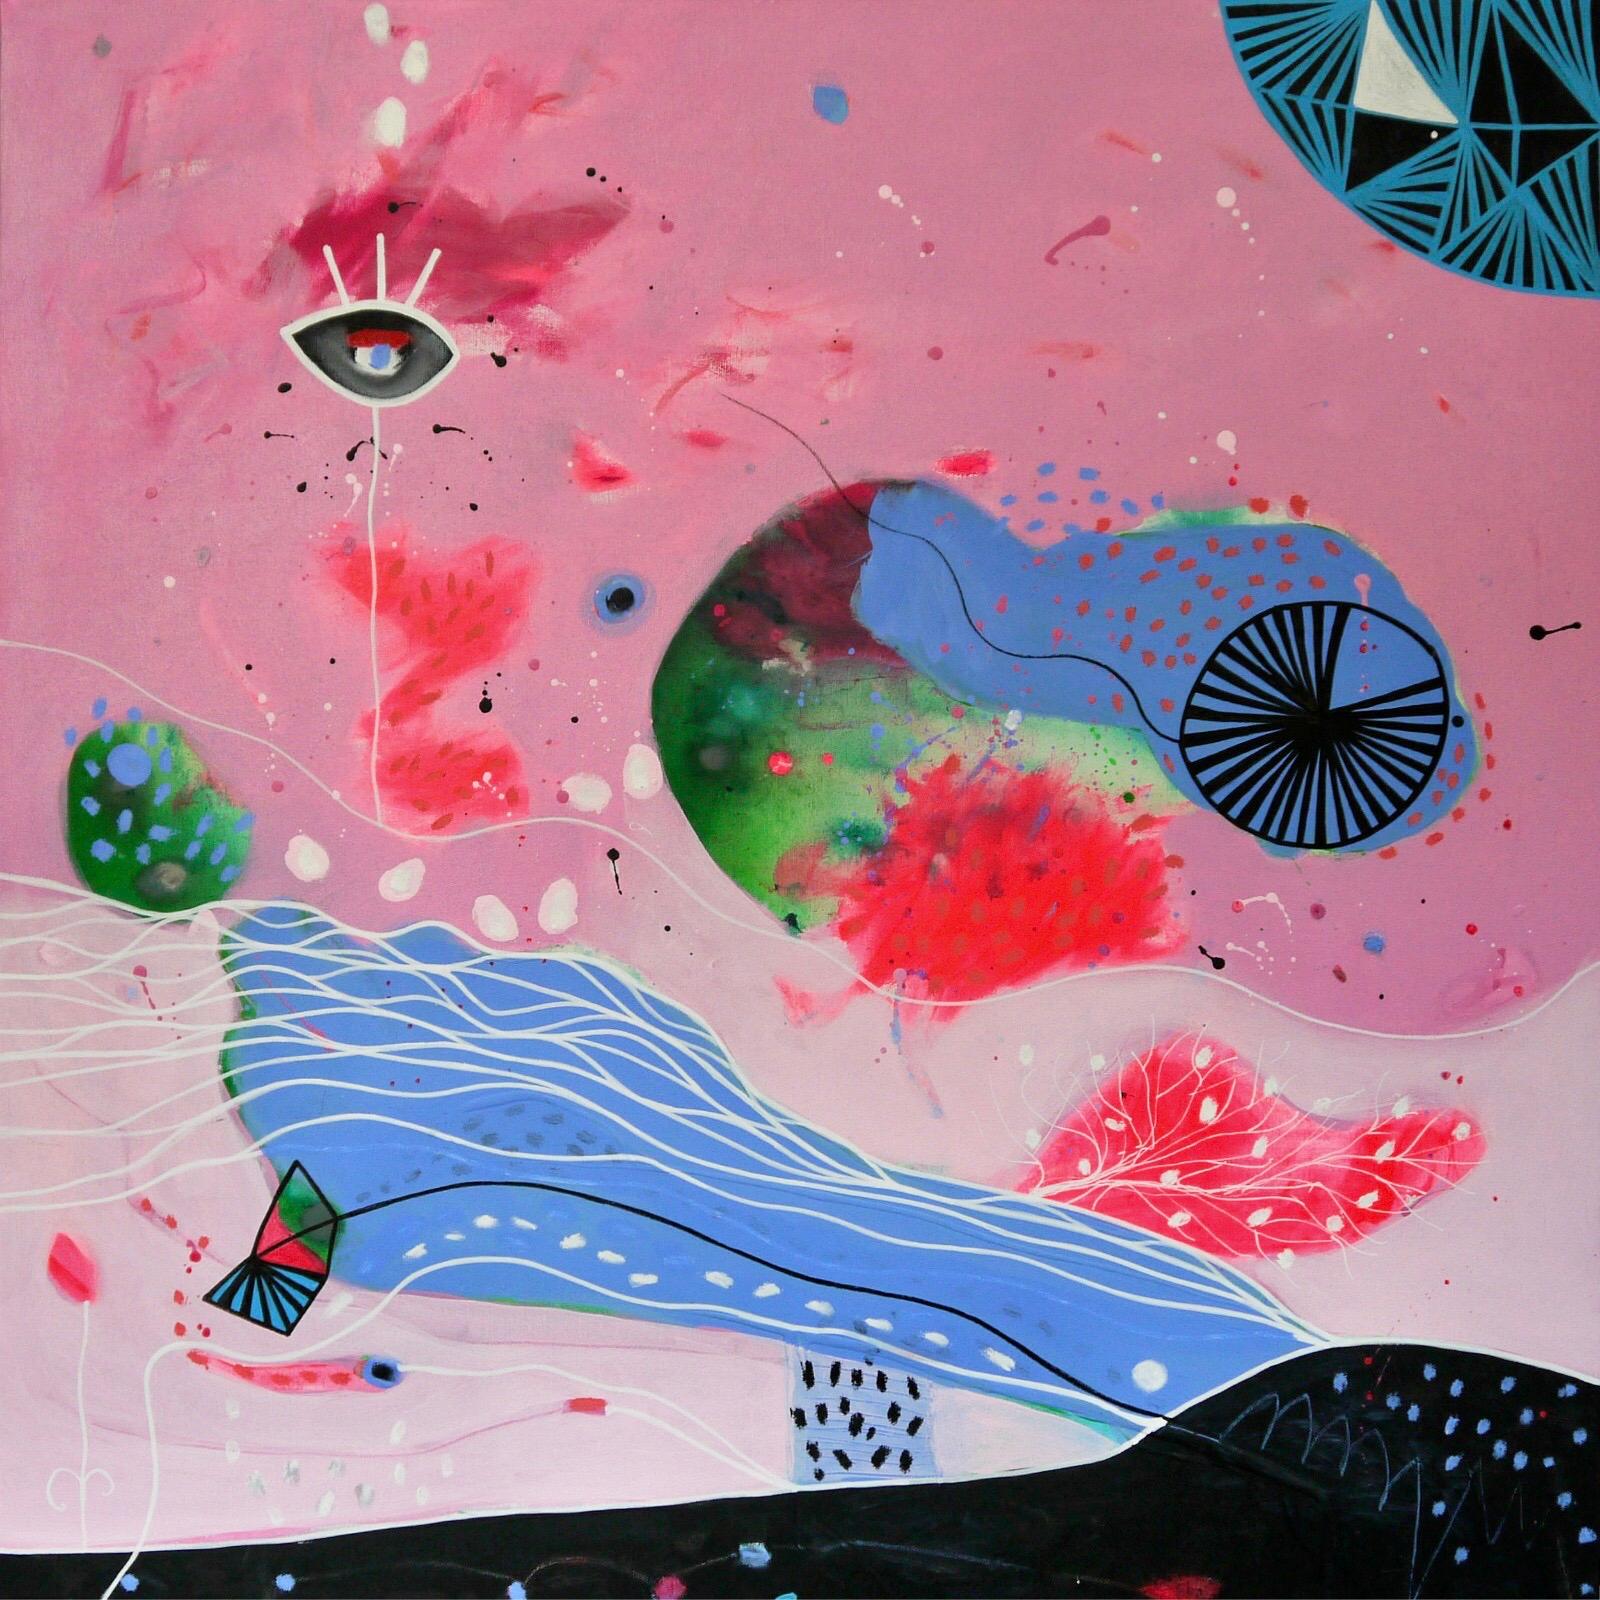 Hurricane Part I - Abstract Expressionist Painting by Malgosia Kiernozycka